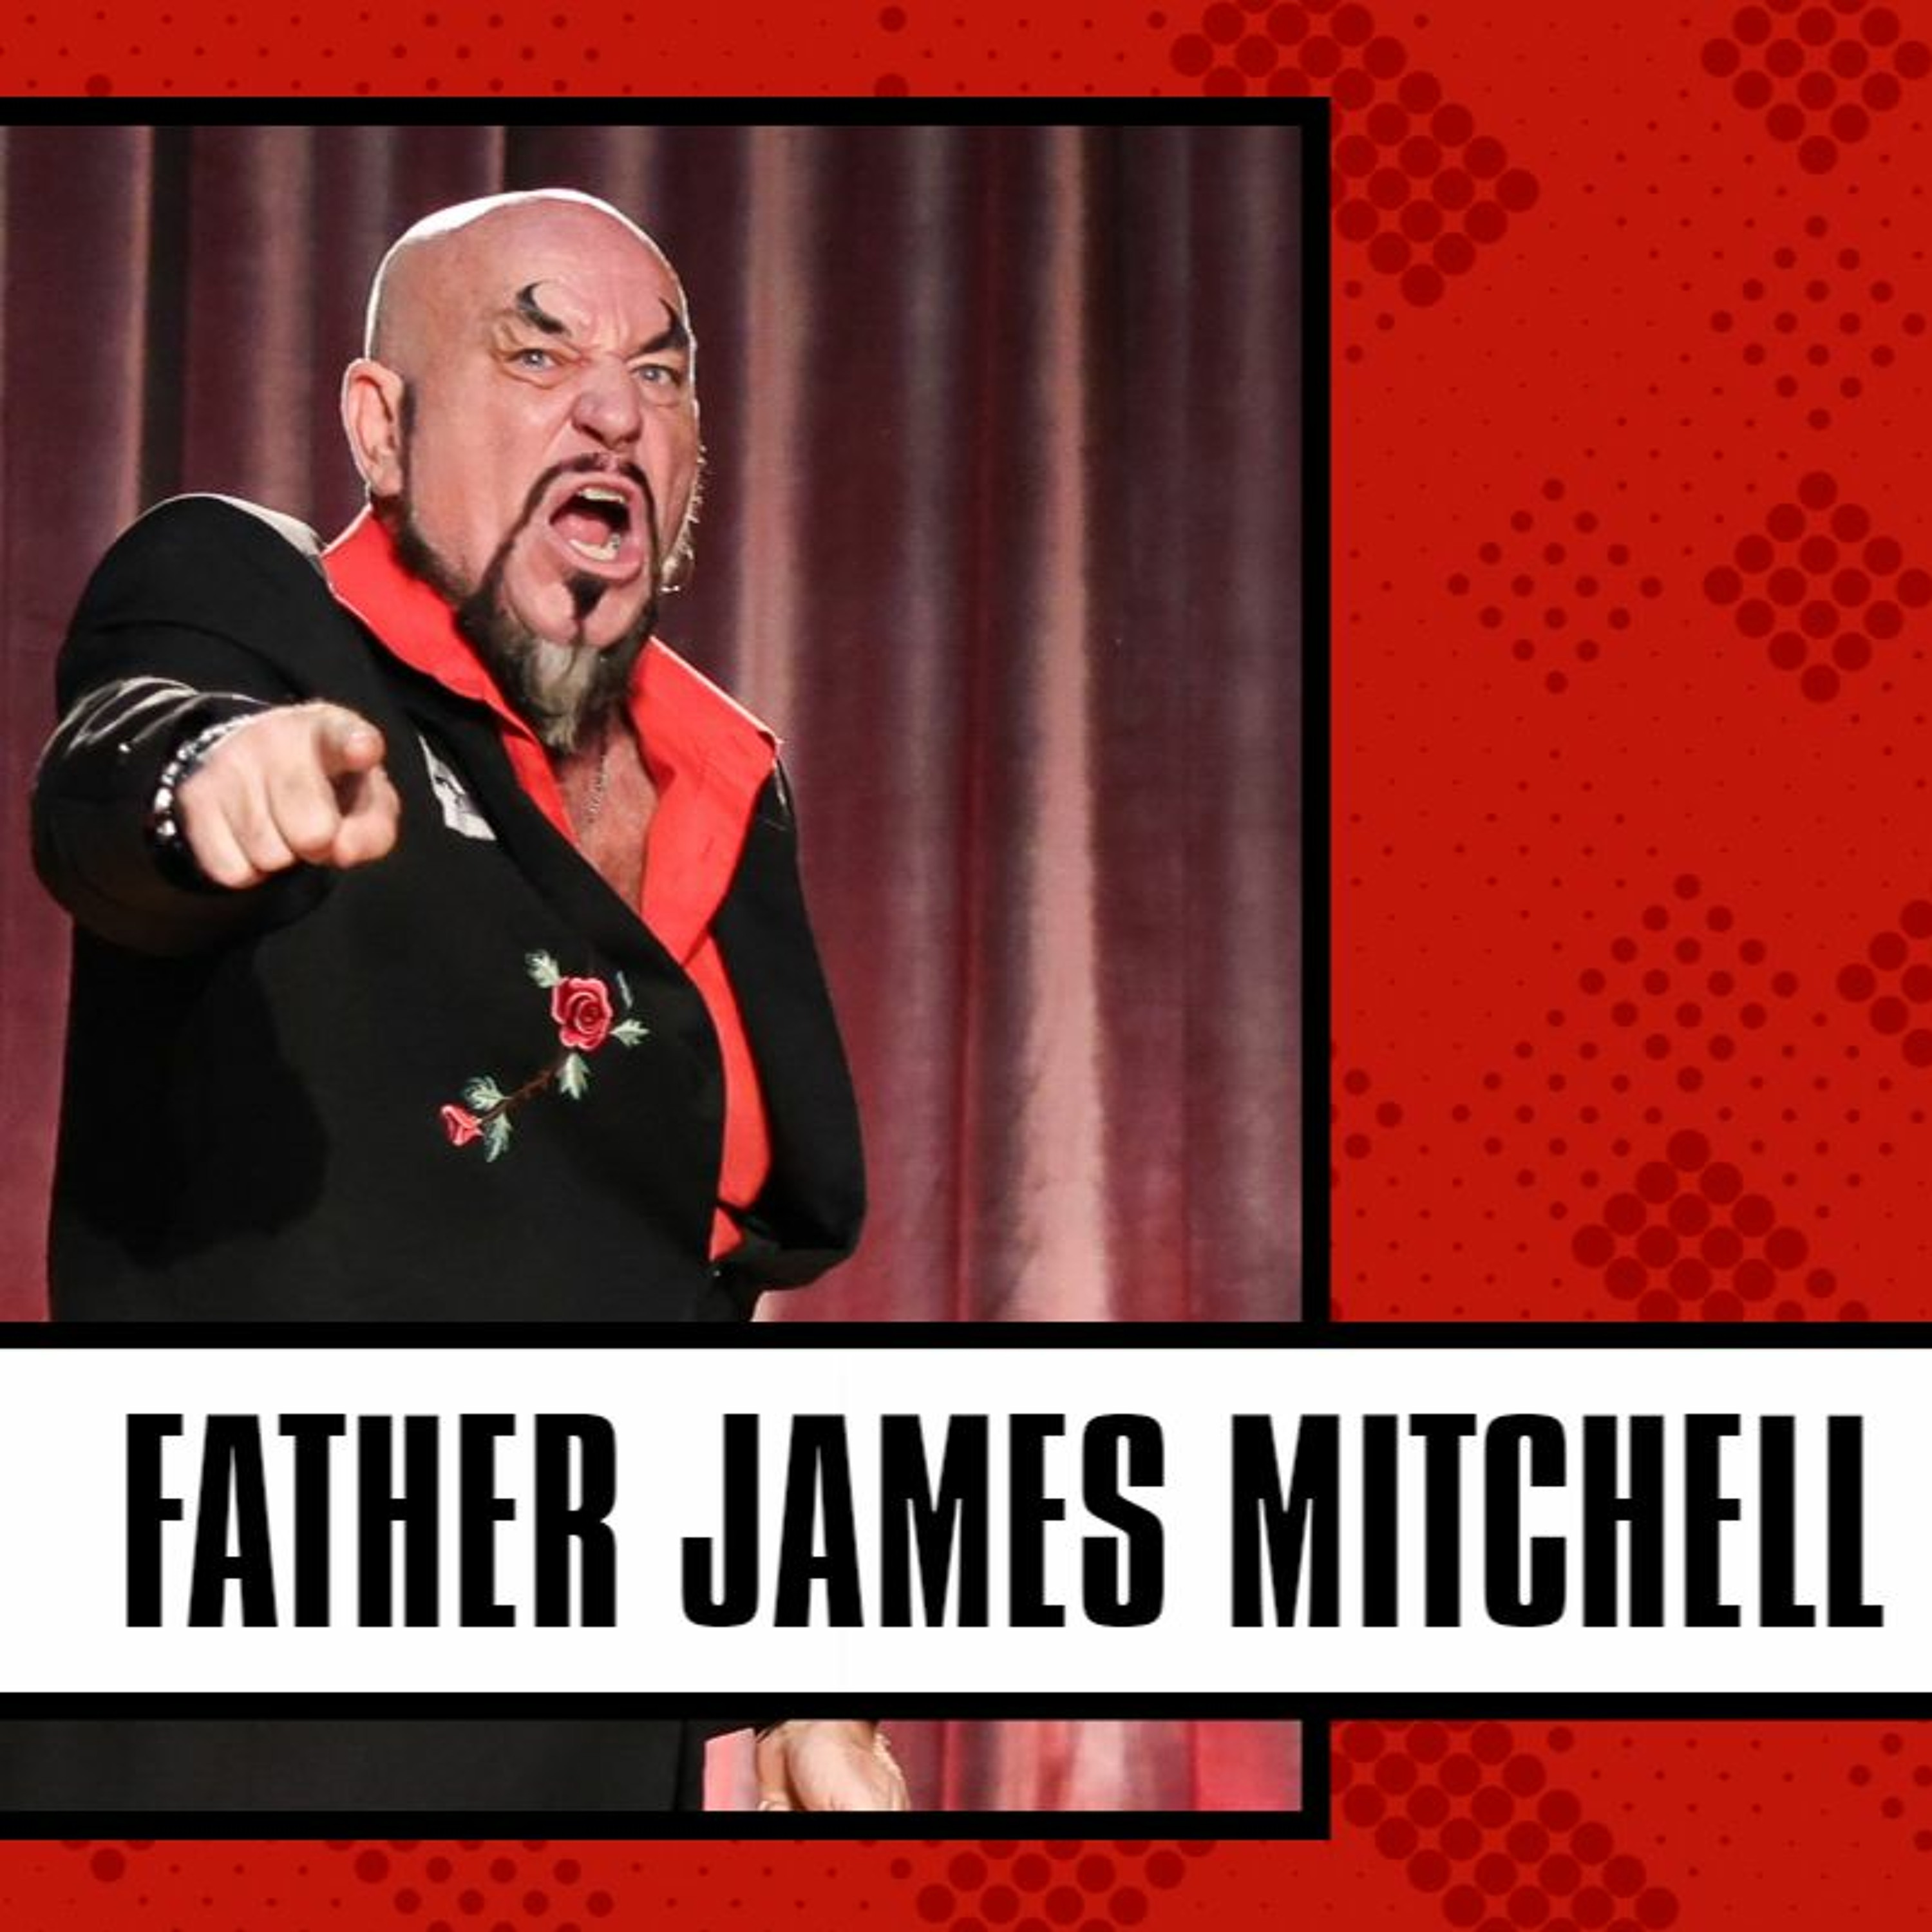 Father James Mitchell On ‘Blood Runs Cold’ Ripping Off Mortal Kombat, NWA Samhain